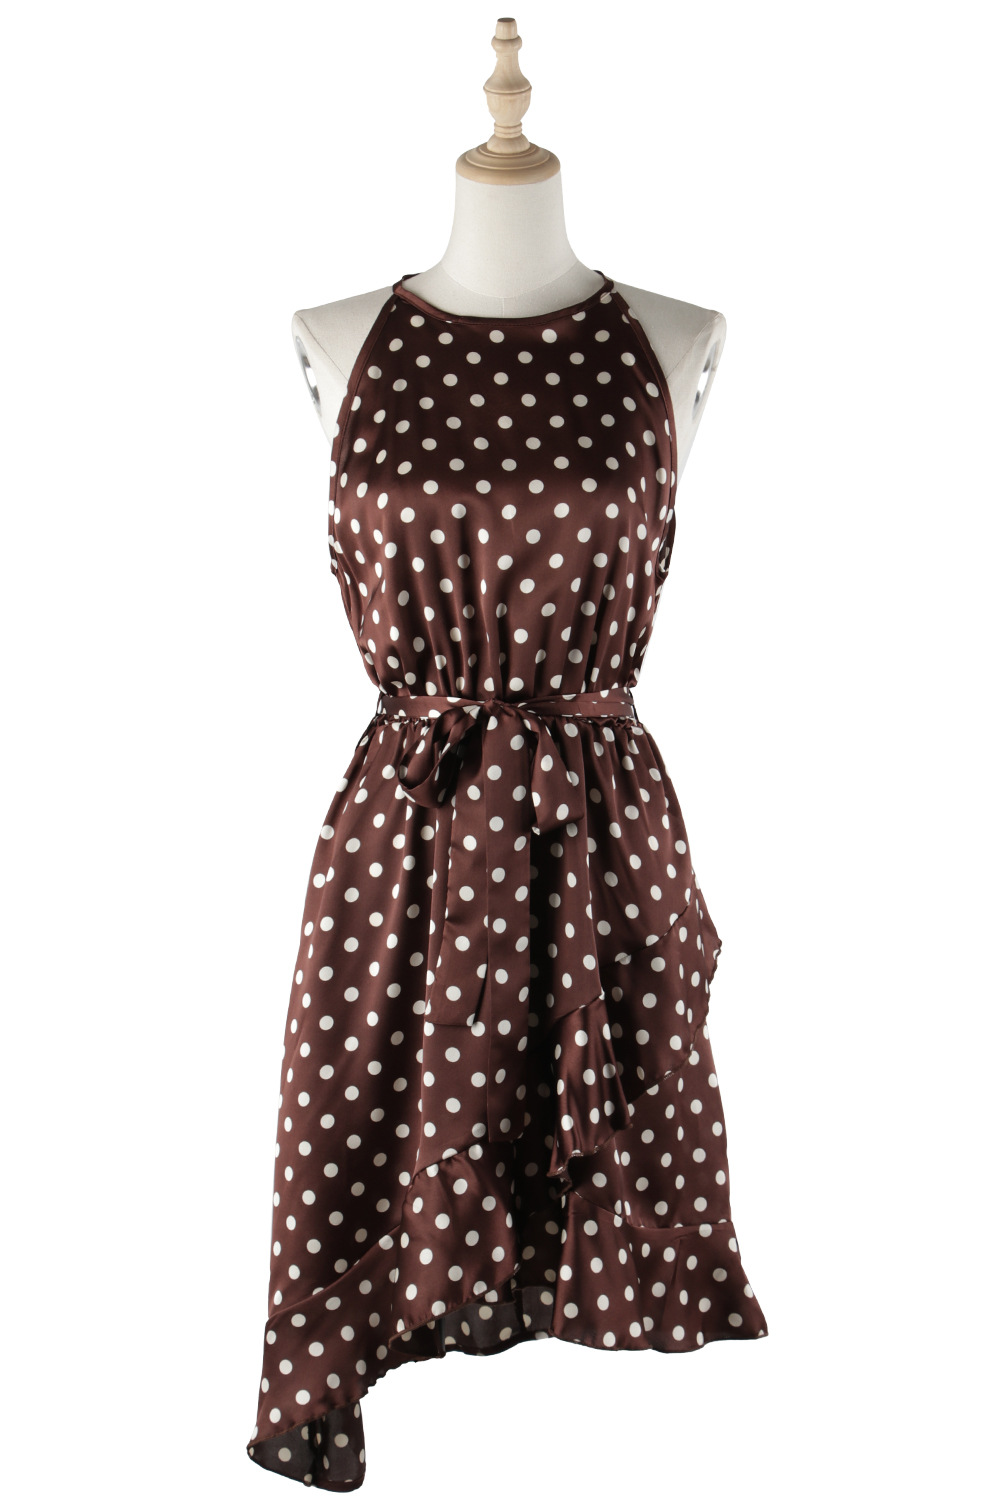 Polka dot sling European style pinched waist dress